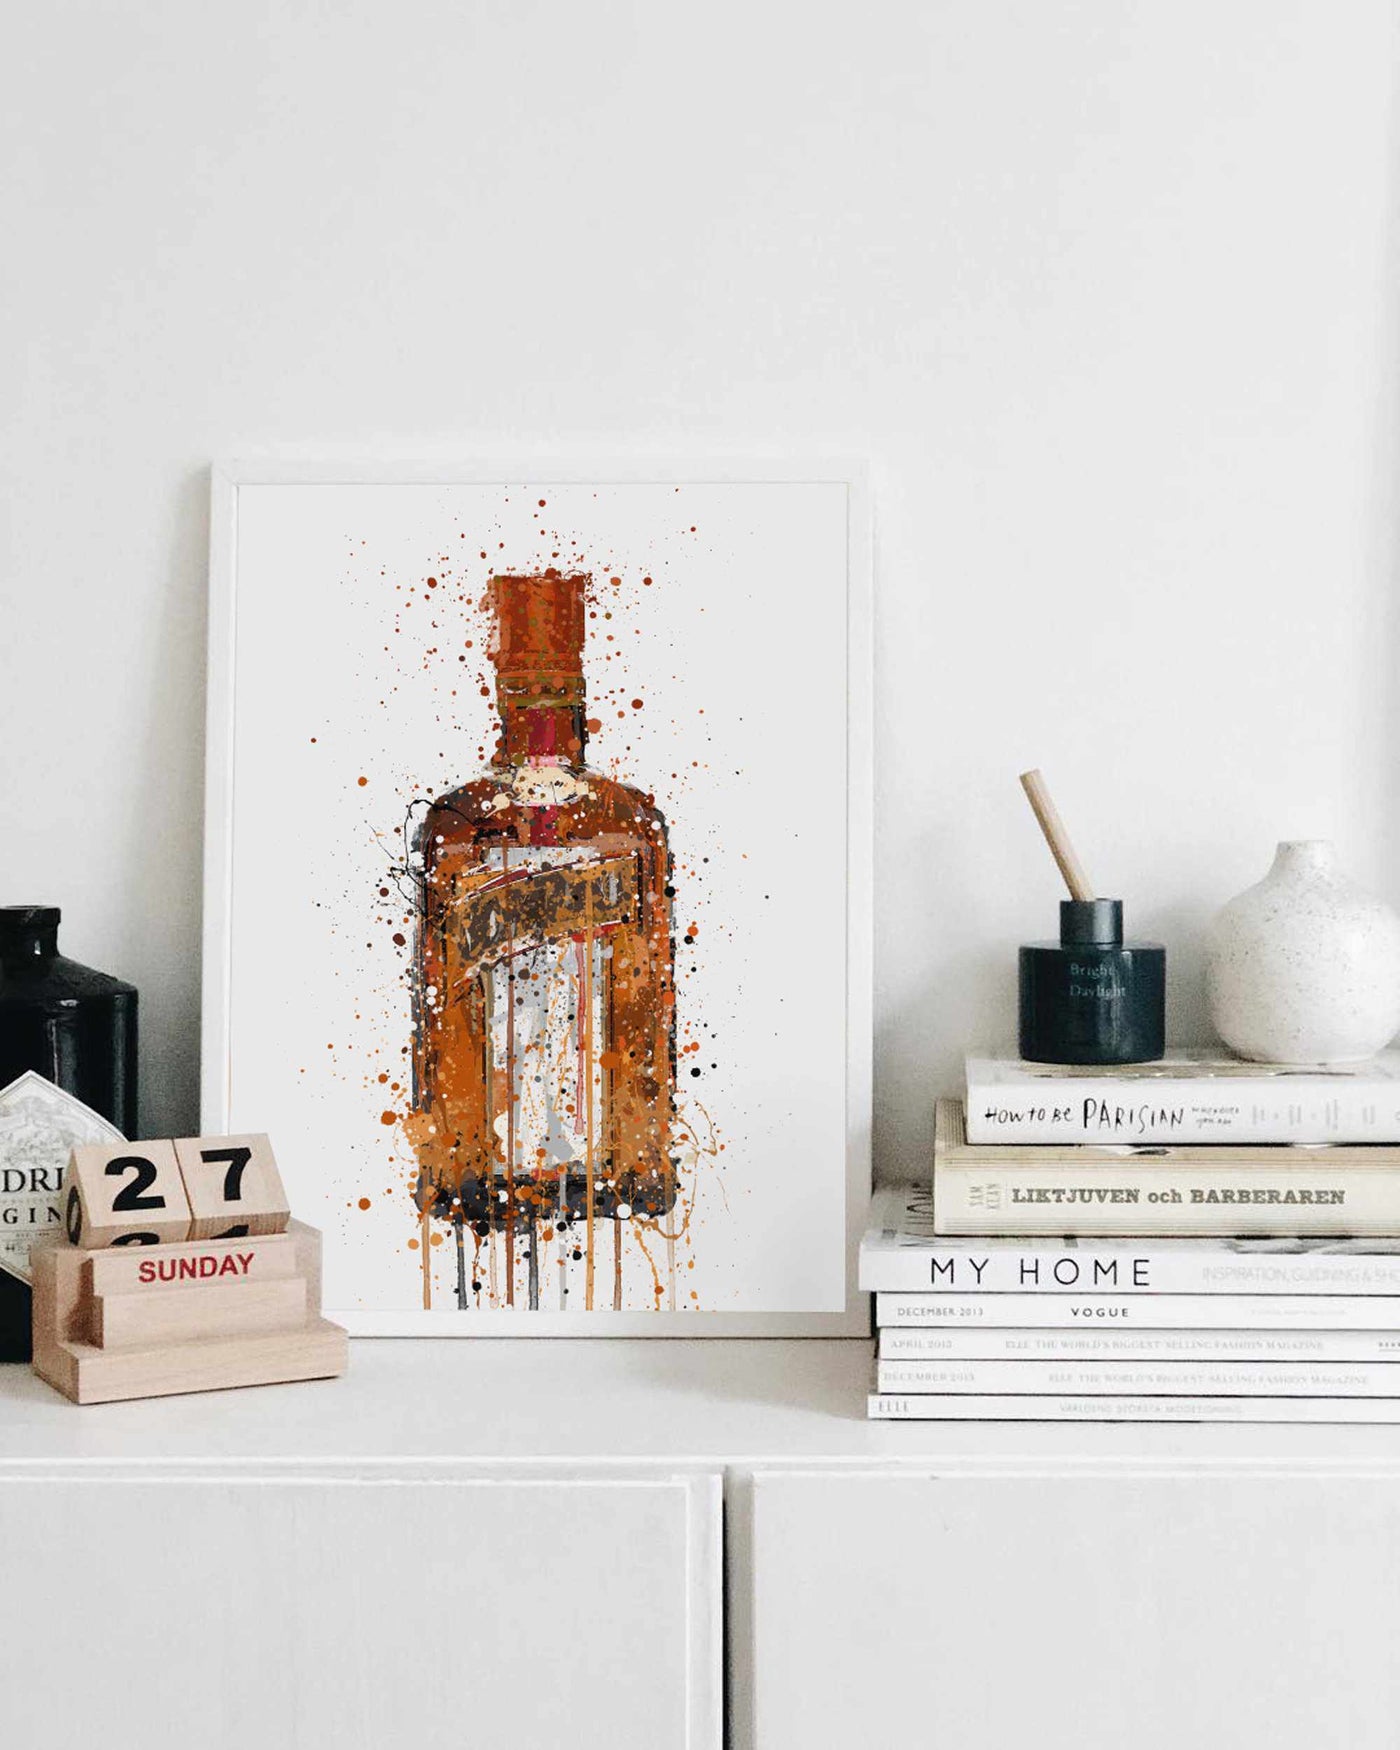 Liqueur Bottle Wall Art Print 'Tangerine'-We Love Prints